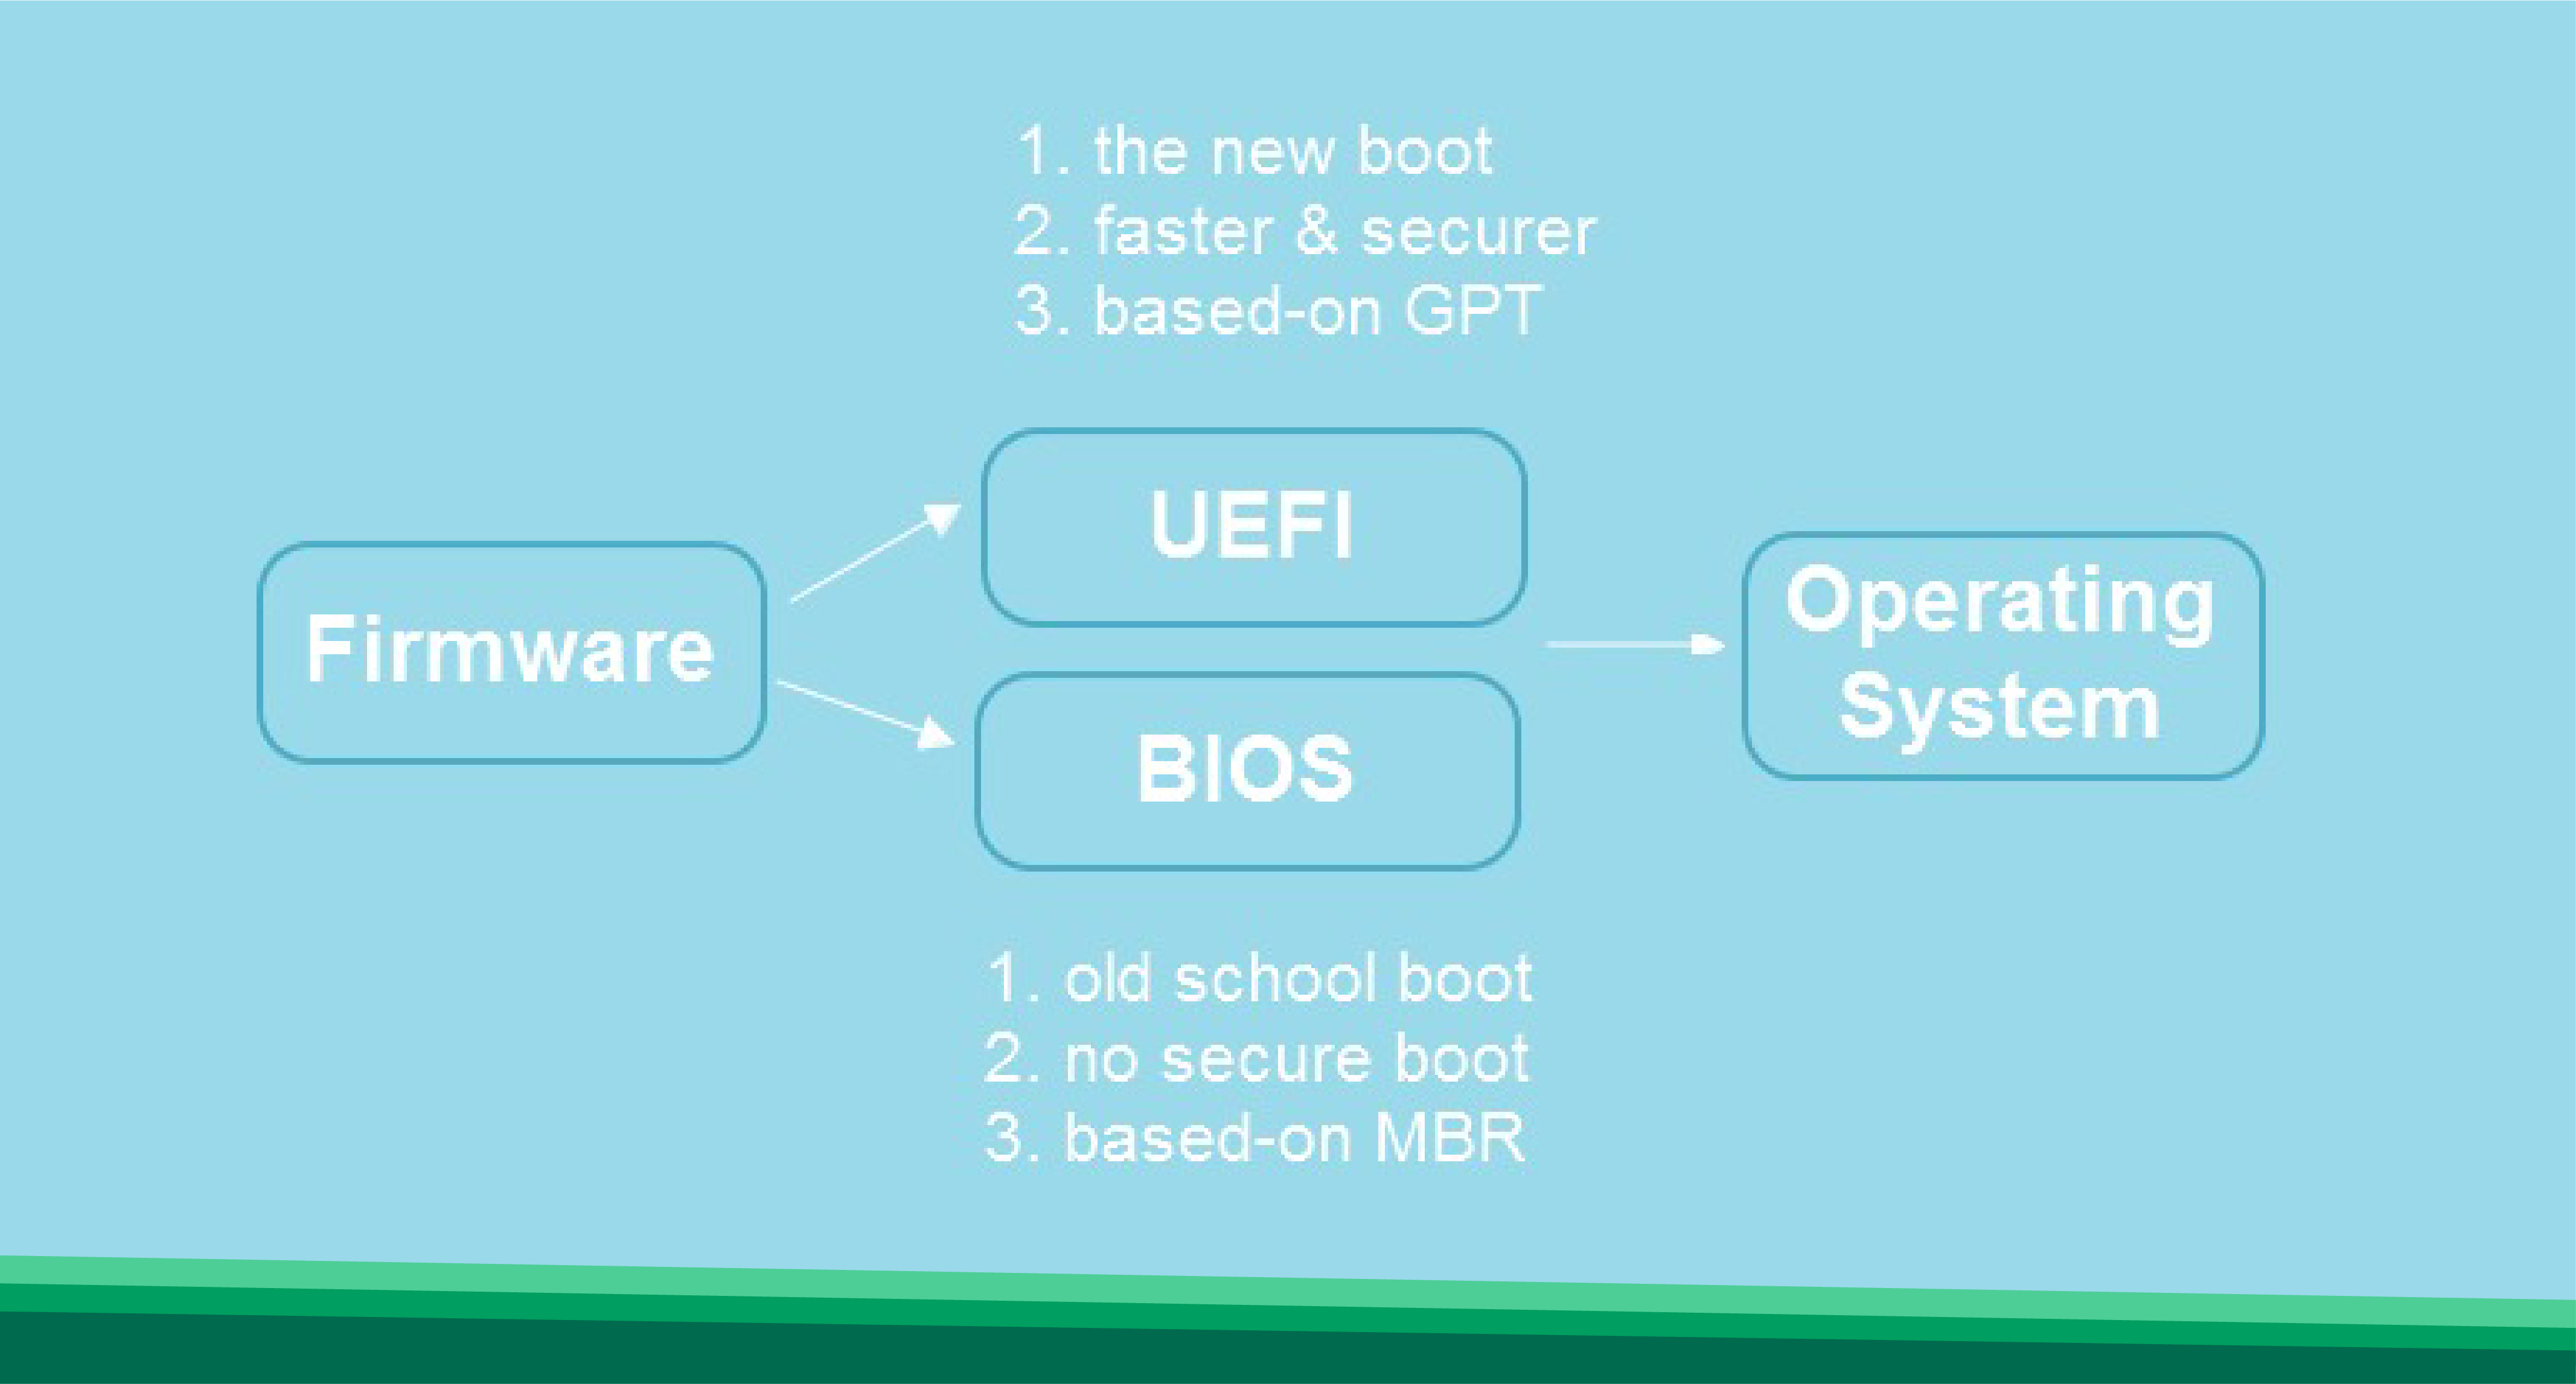 Legacy Boot vs. UEFI